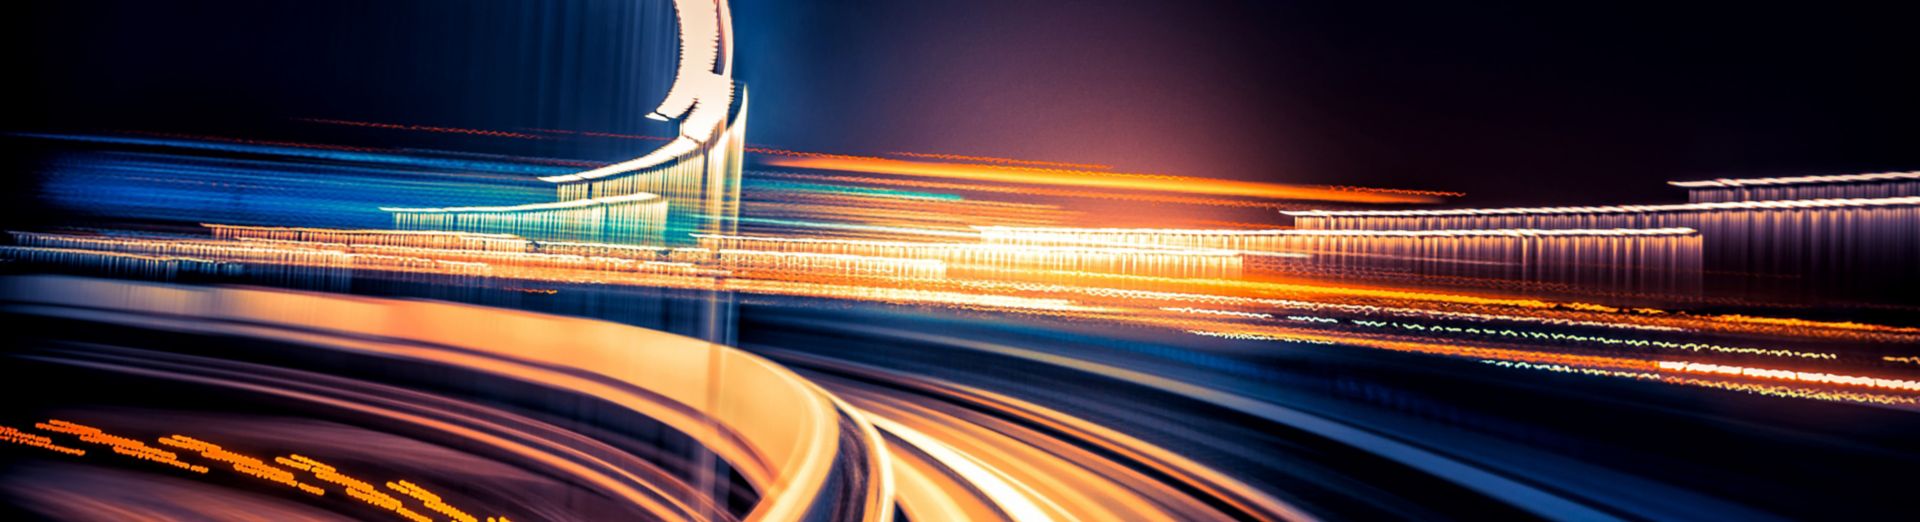 SAP Business Network を象徴する高速道路網